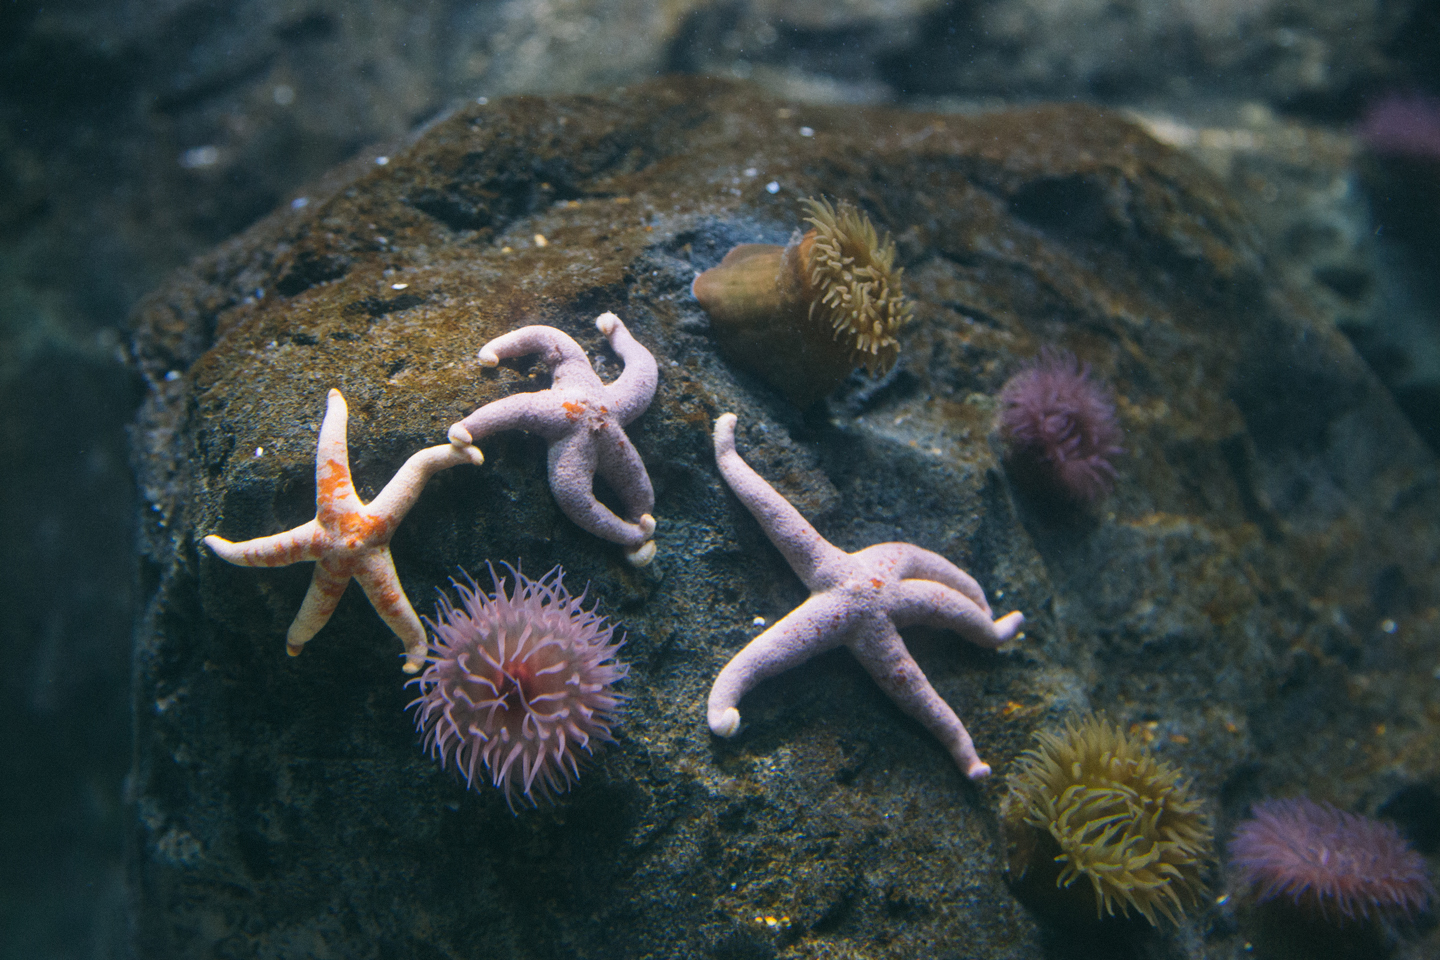 Starfish British waters at SEA LIFE